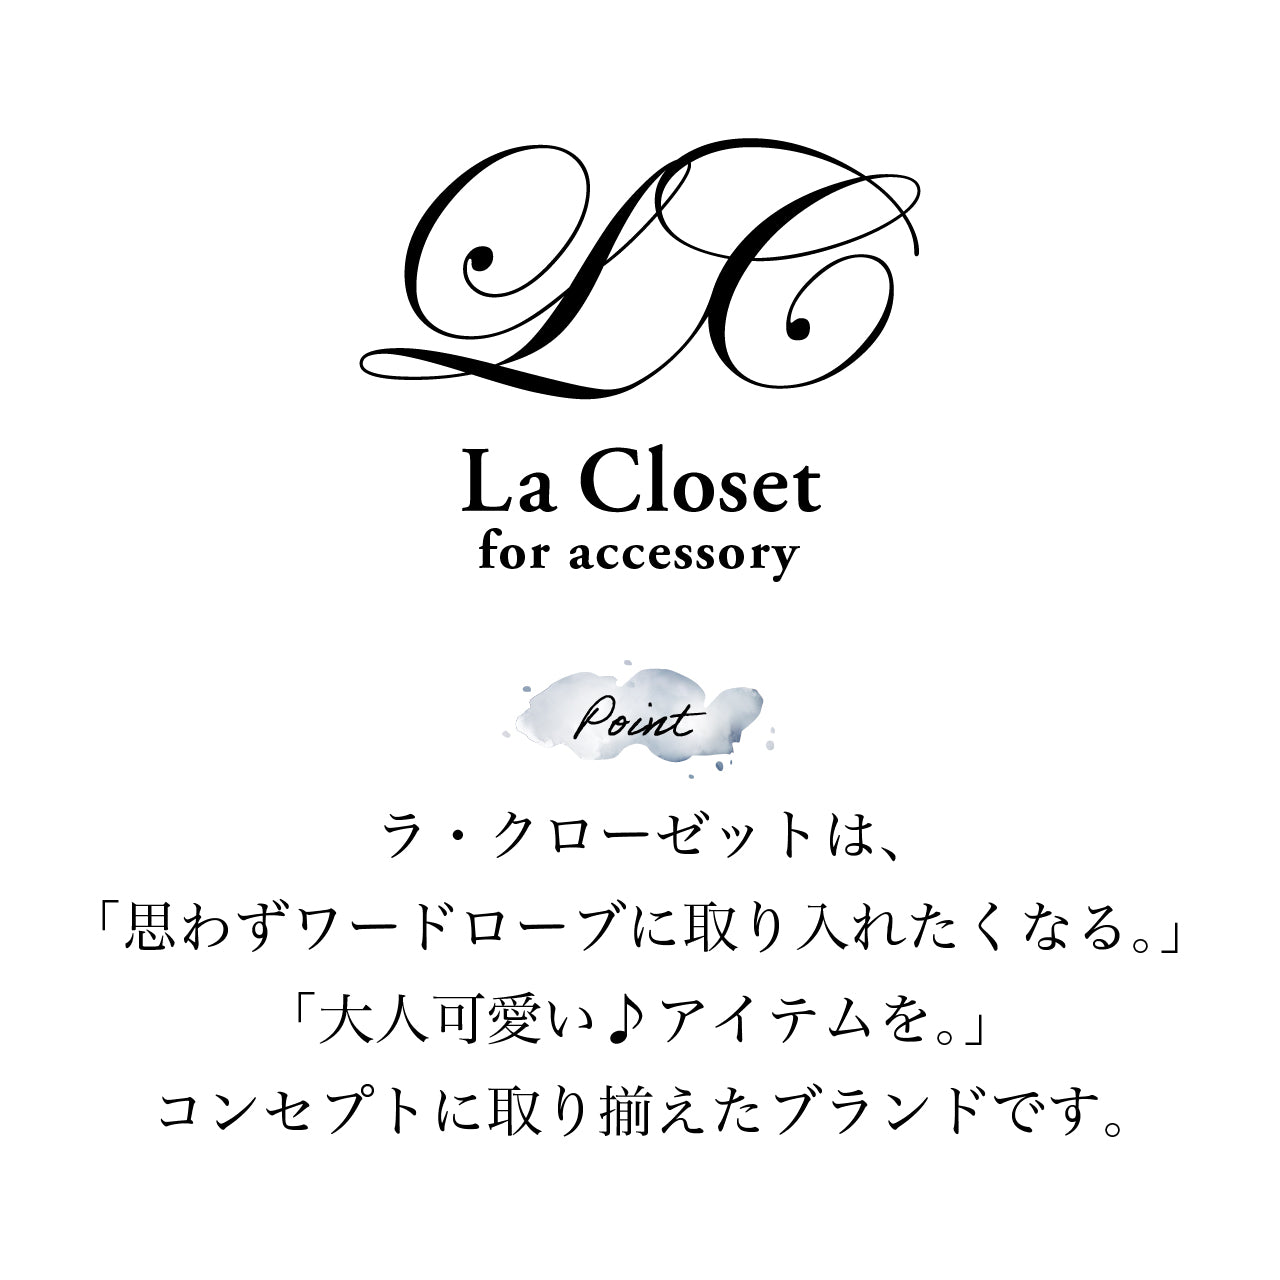 【La Closet】ボリュームデザインリング SILVER925製 フリーサイズ シンプル ゴールド シルバーアクセサリー 純銀 リング 指輪 ピンキーリング ファランジリング ミディリング